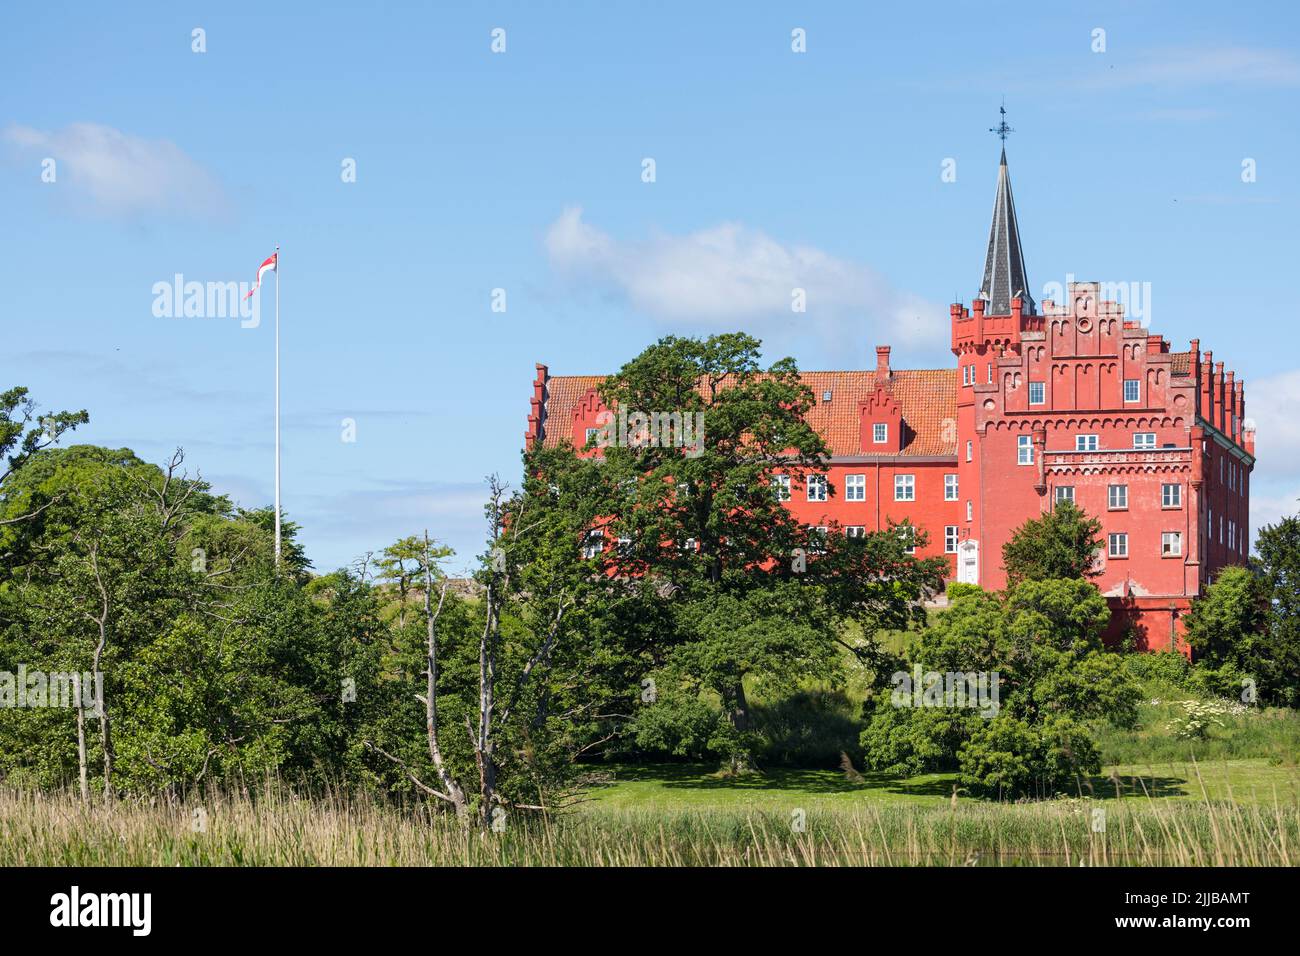 13th century castle at Tranekær, island of Langeland, Denmark Stock Photo